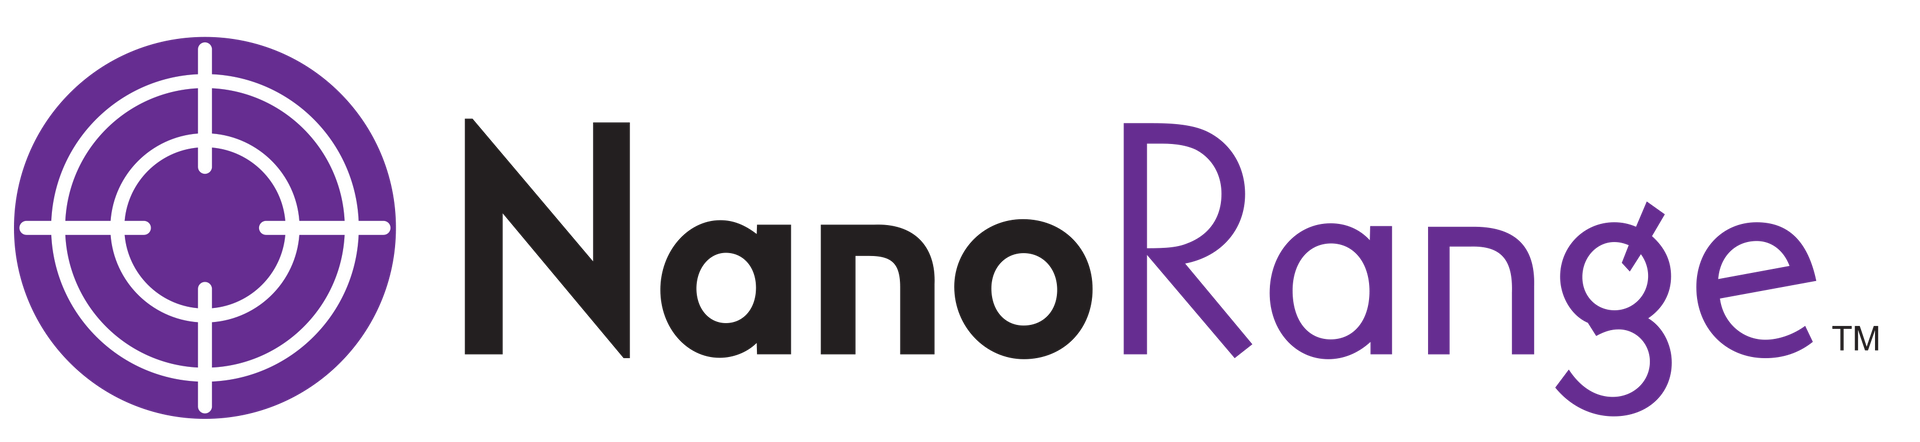 NanoRange™